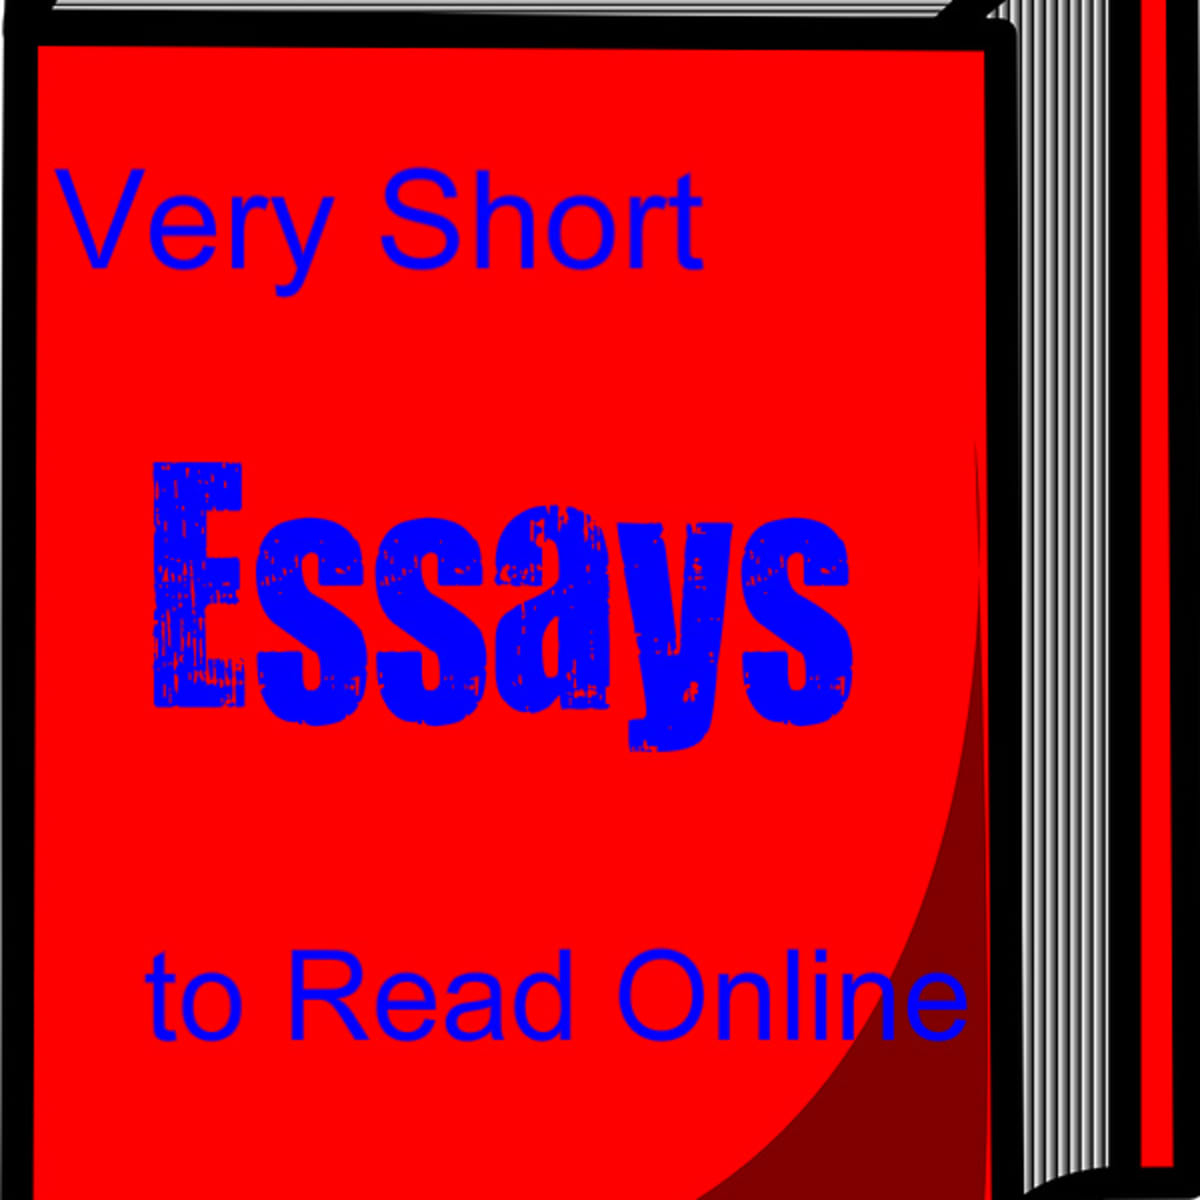 essay writer Review